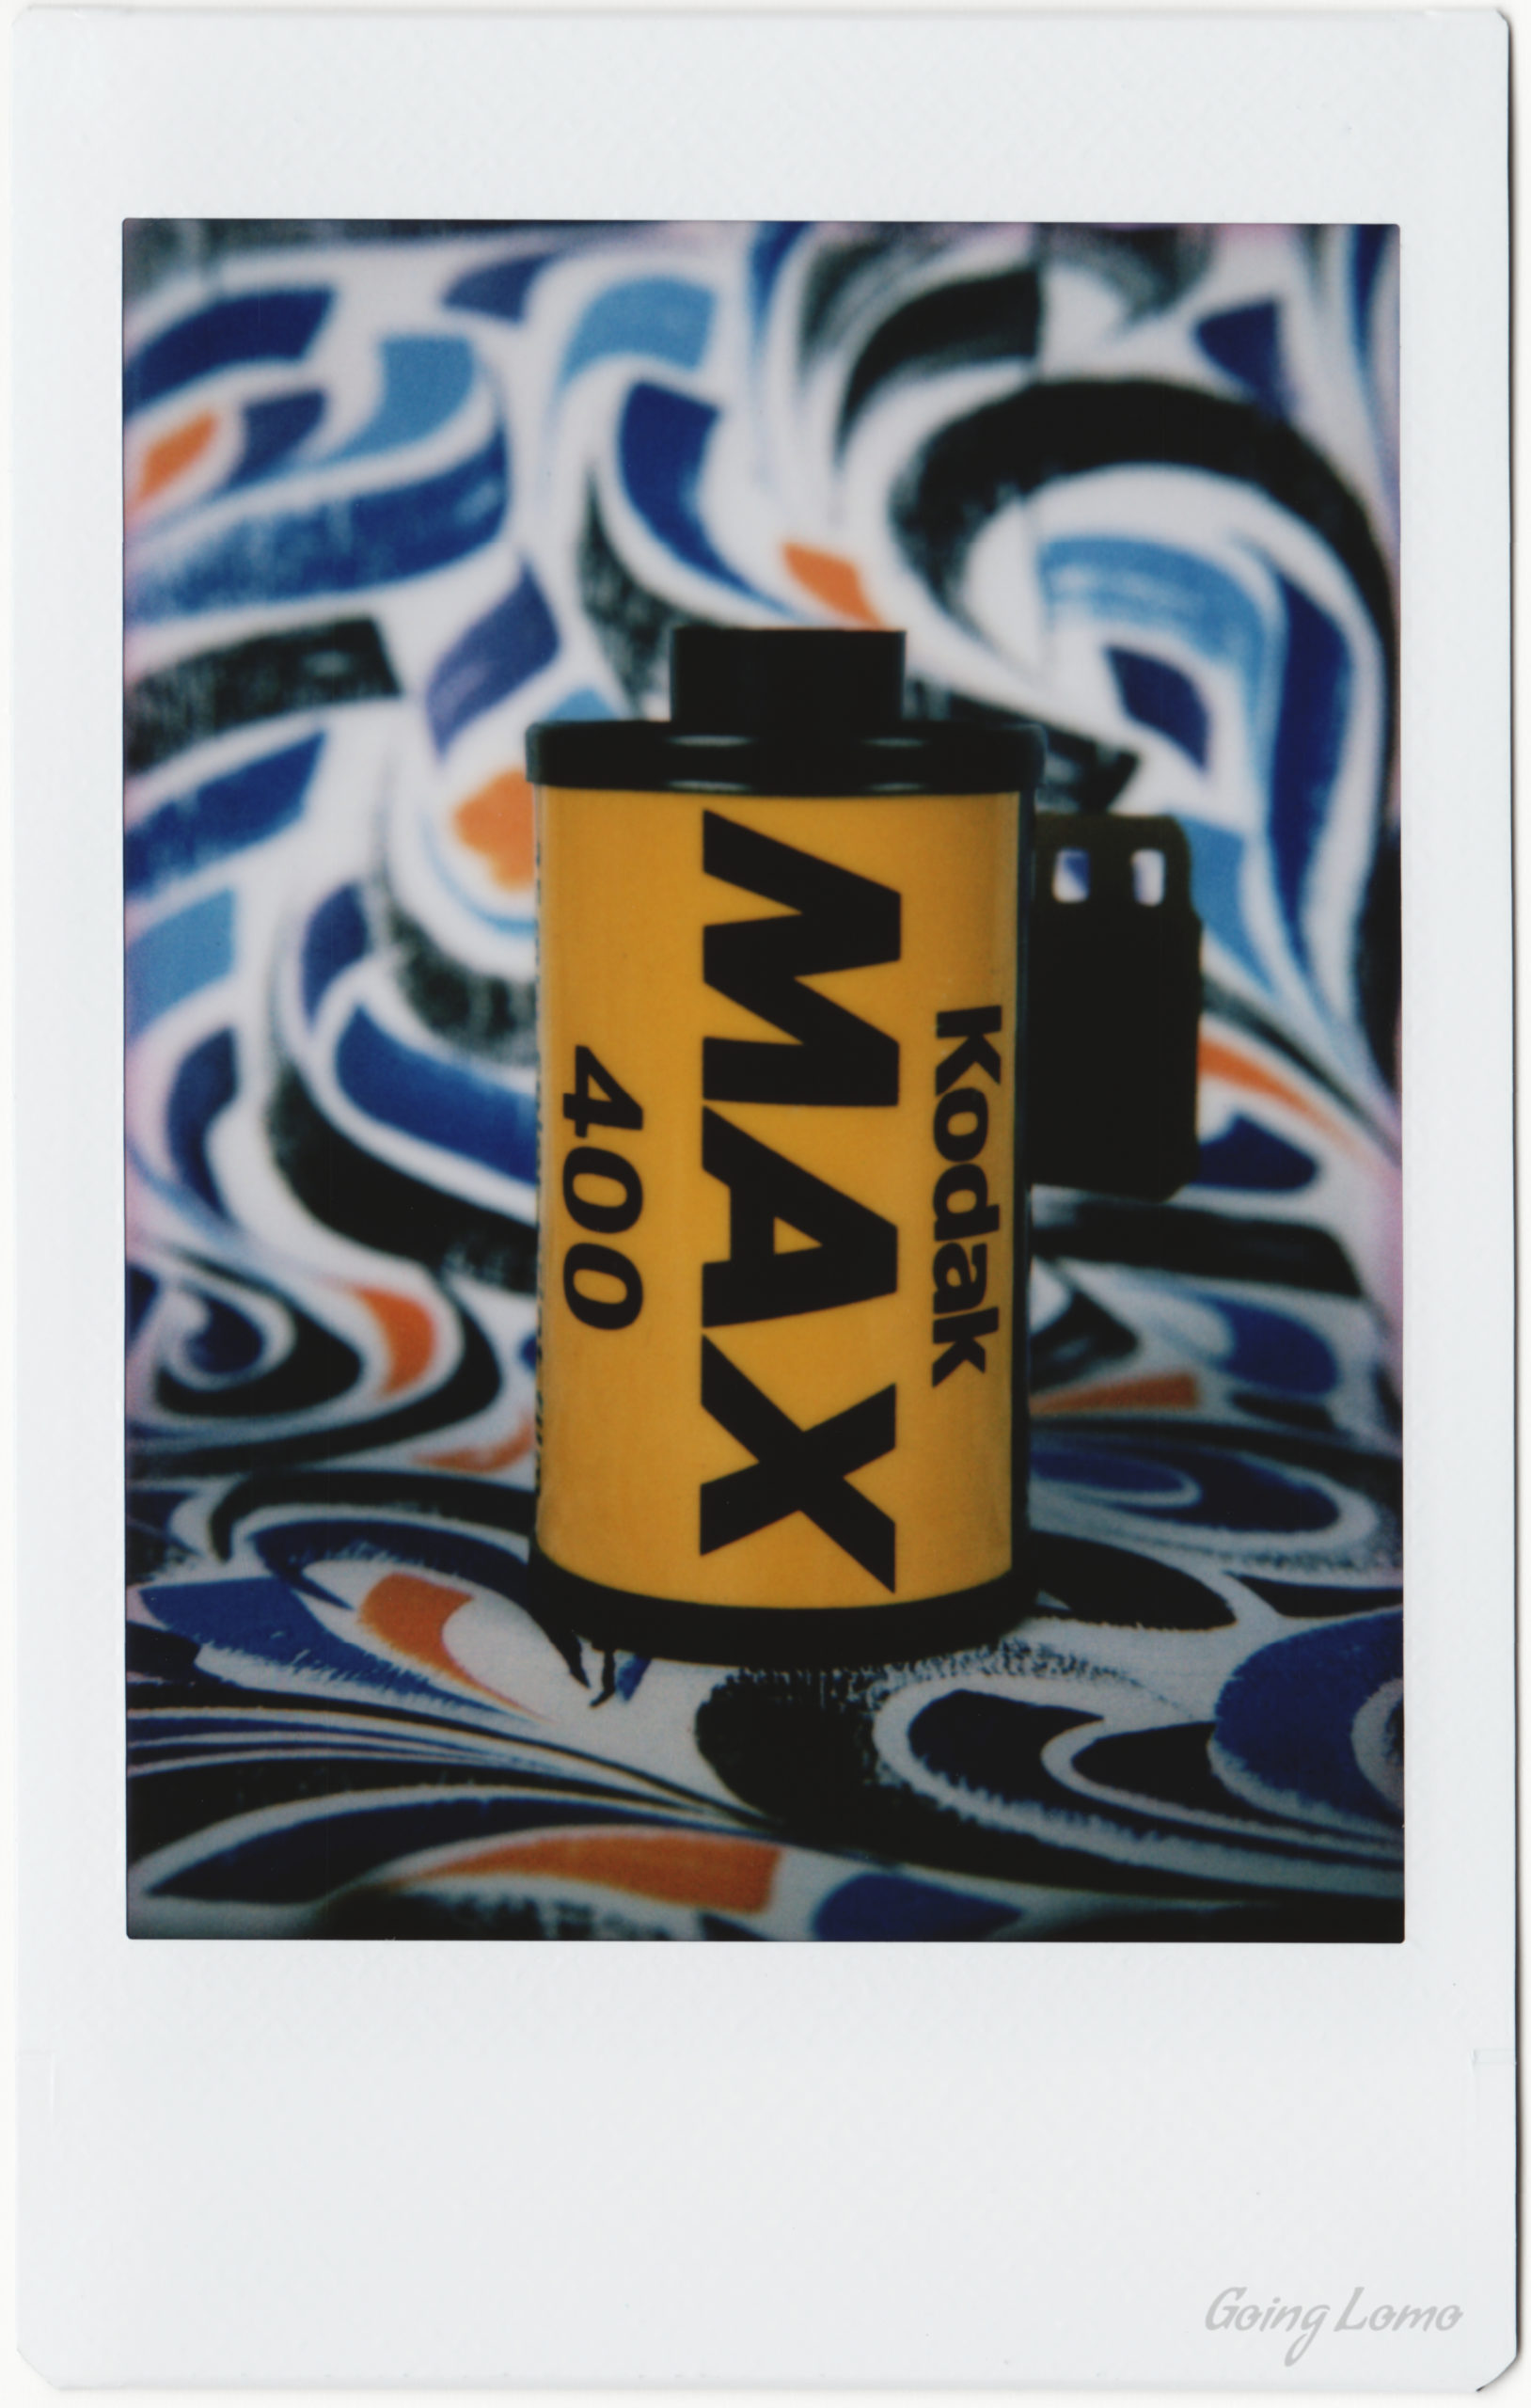 Kodak Ultramax 400 Review · Lomography